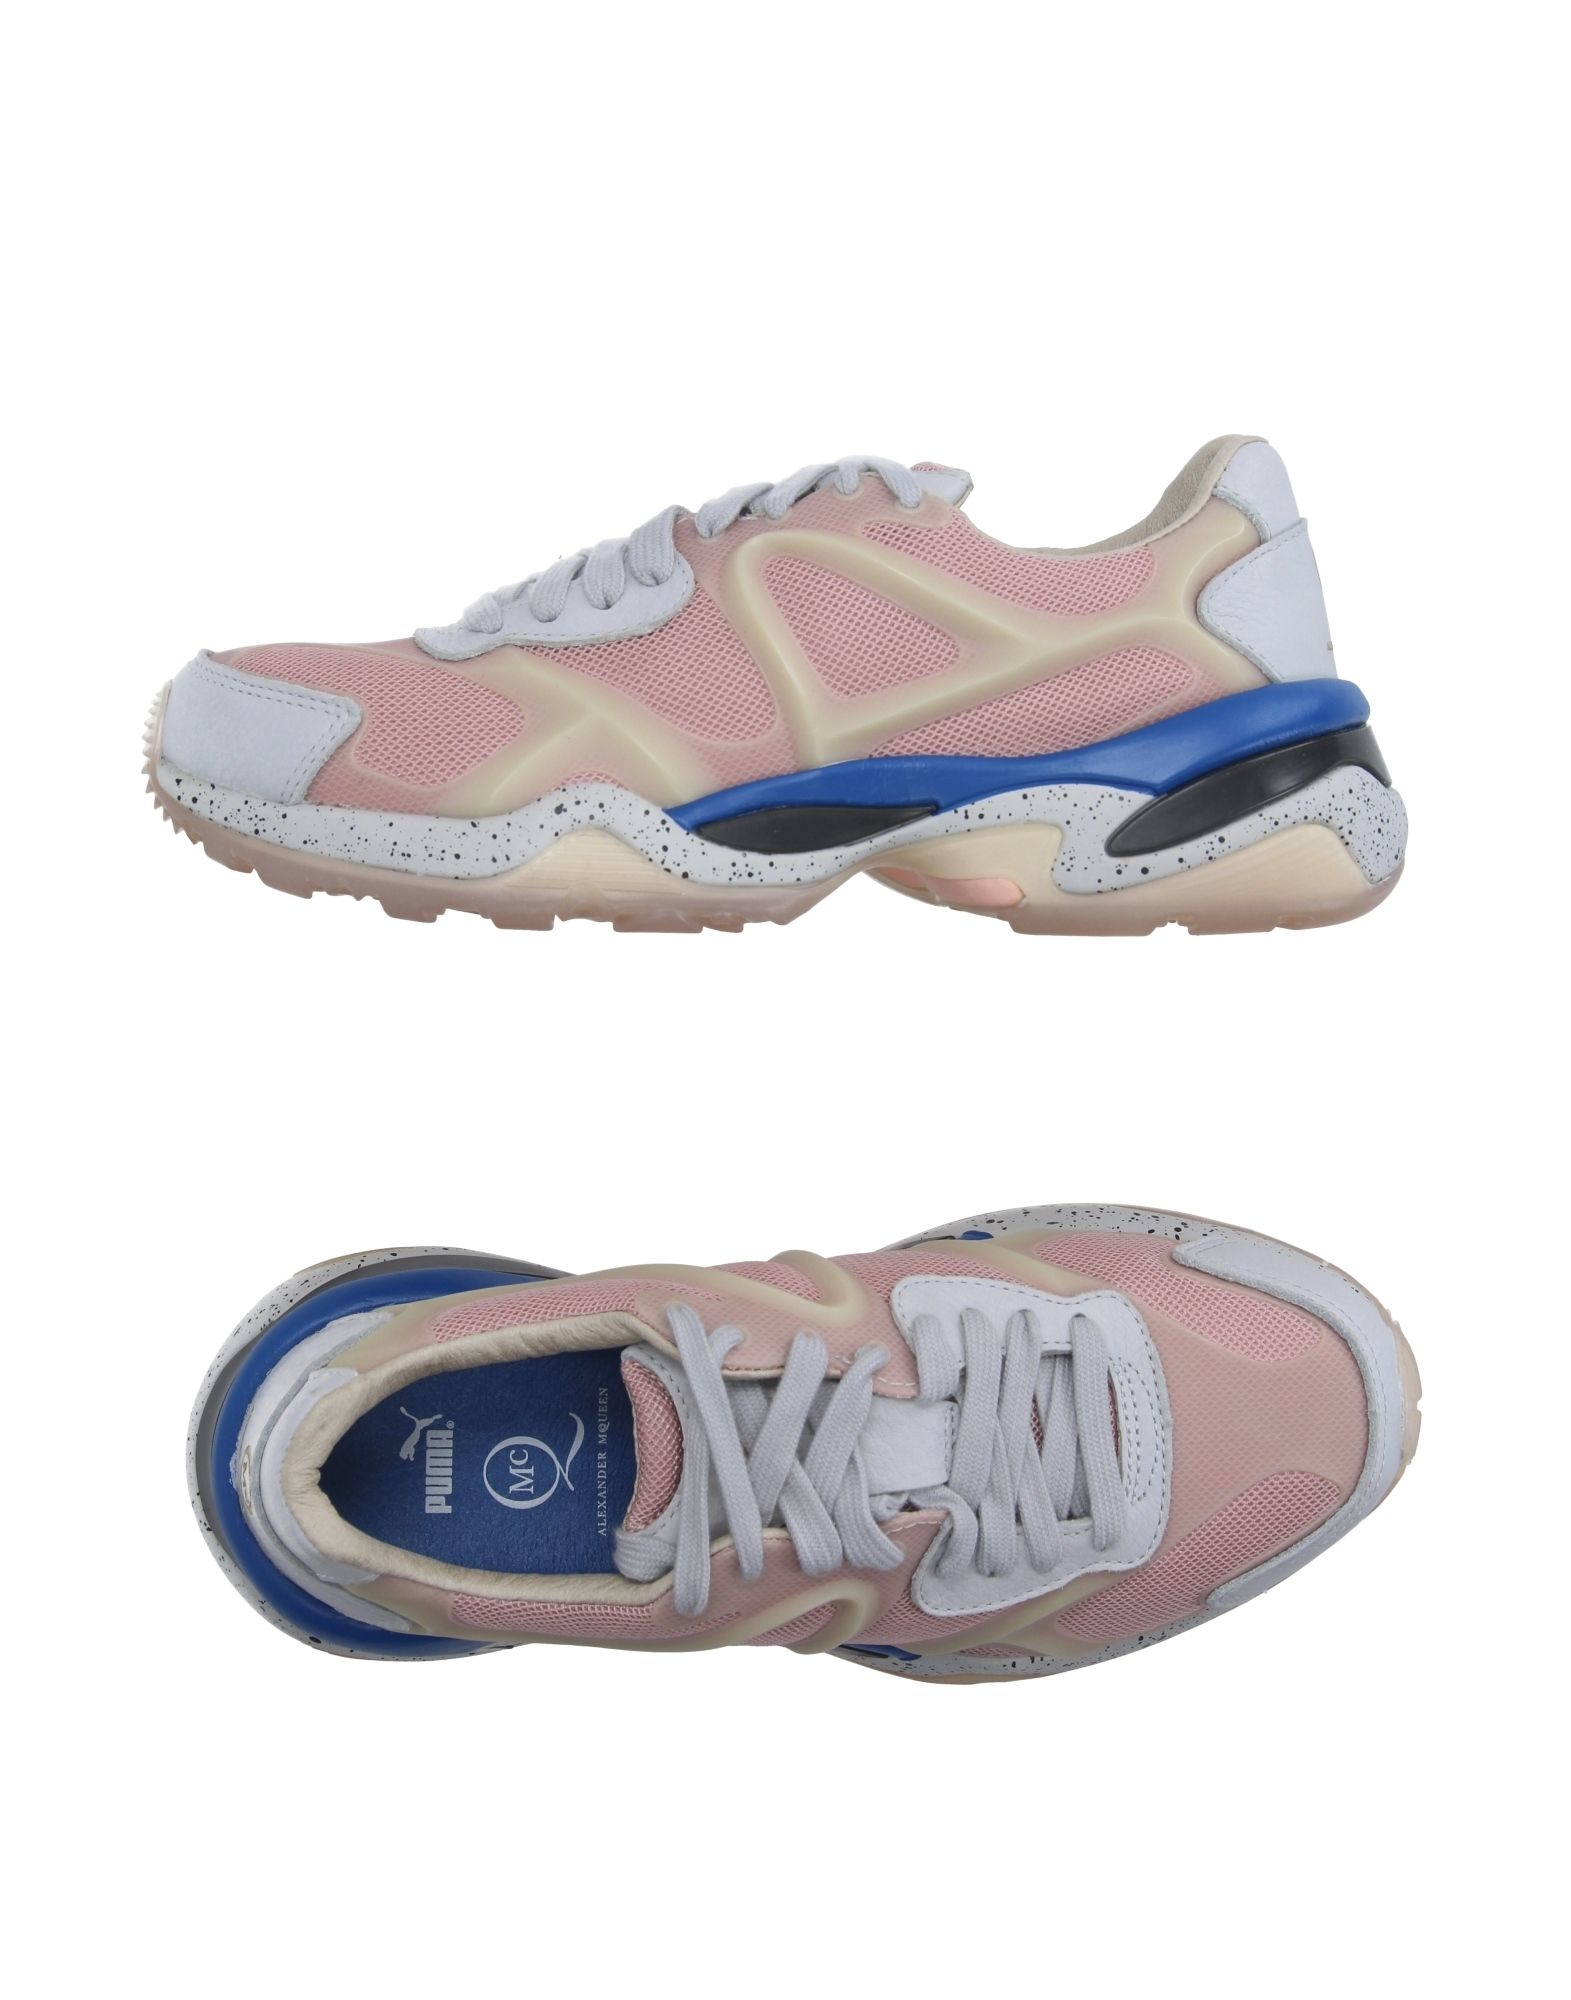 light pink puma shoes